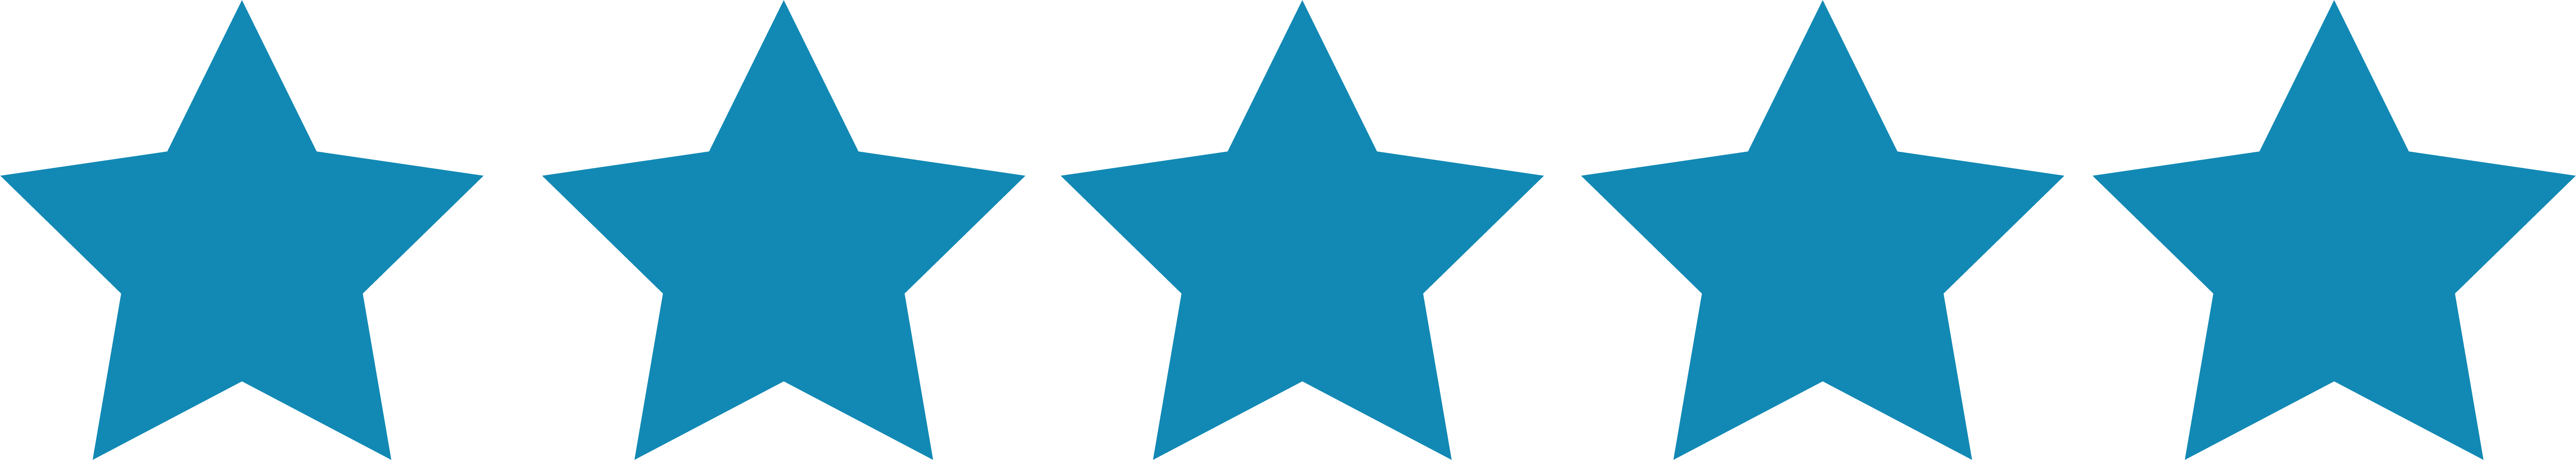 A Blue Star On A Black Background